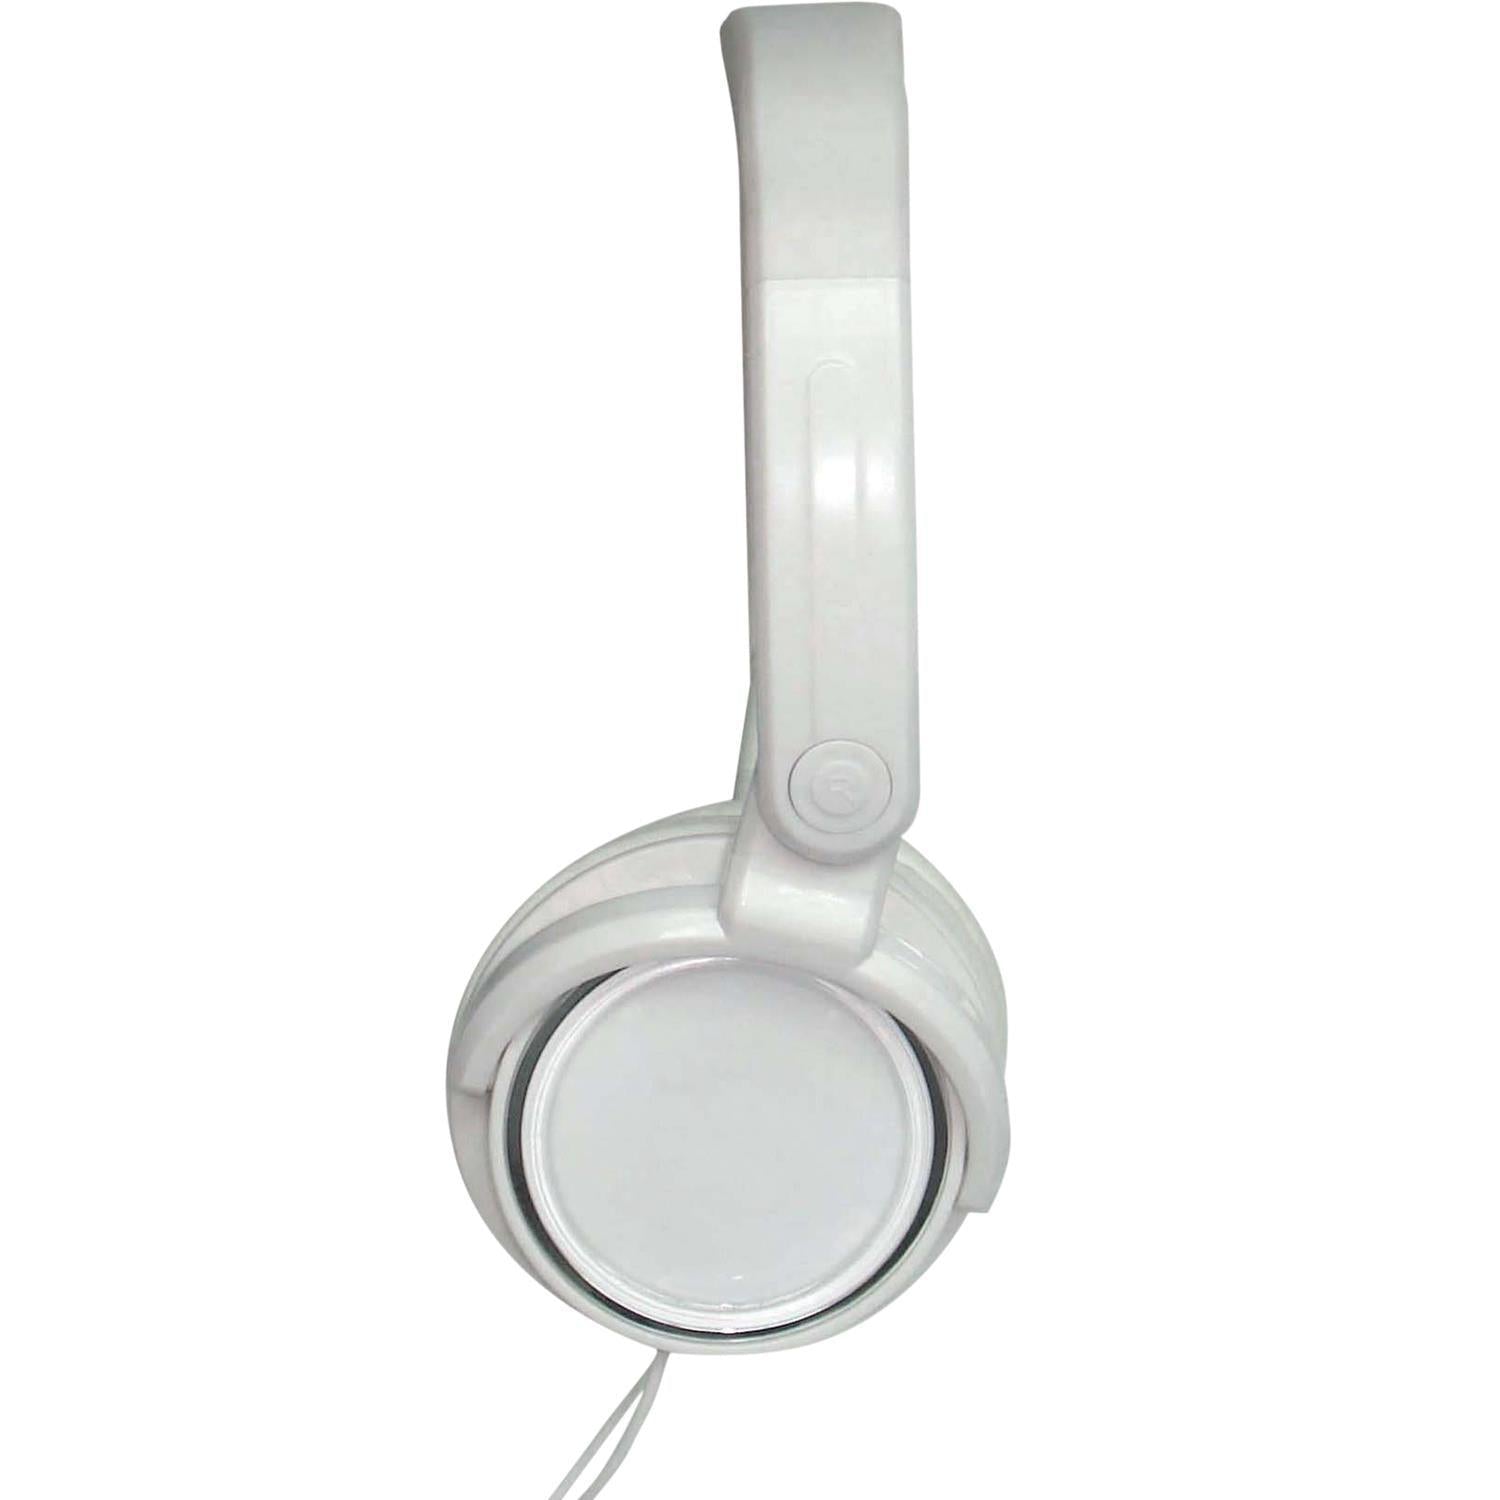 Soundlab Digital Hi-Fi Stero Headphones White - DY Pro Audio